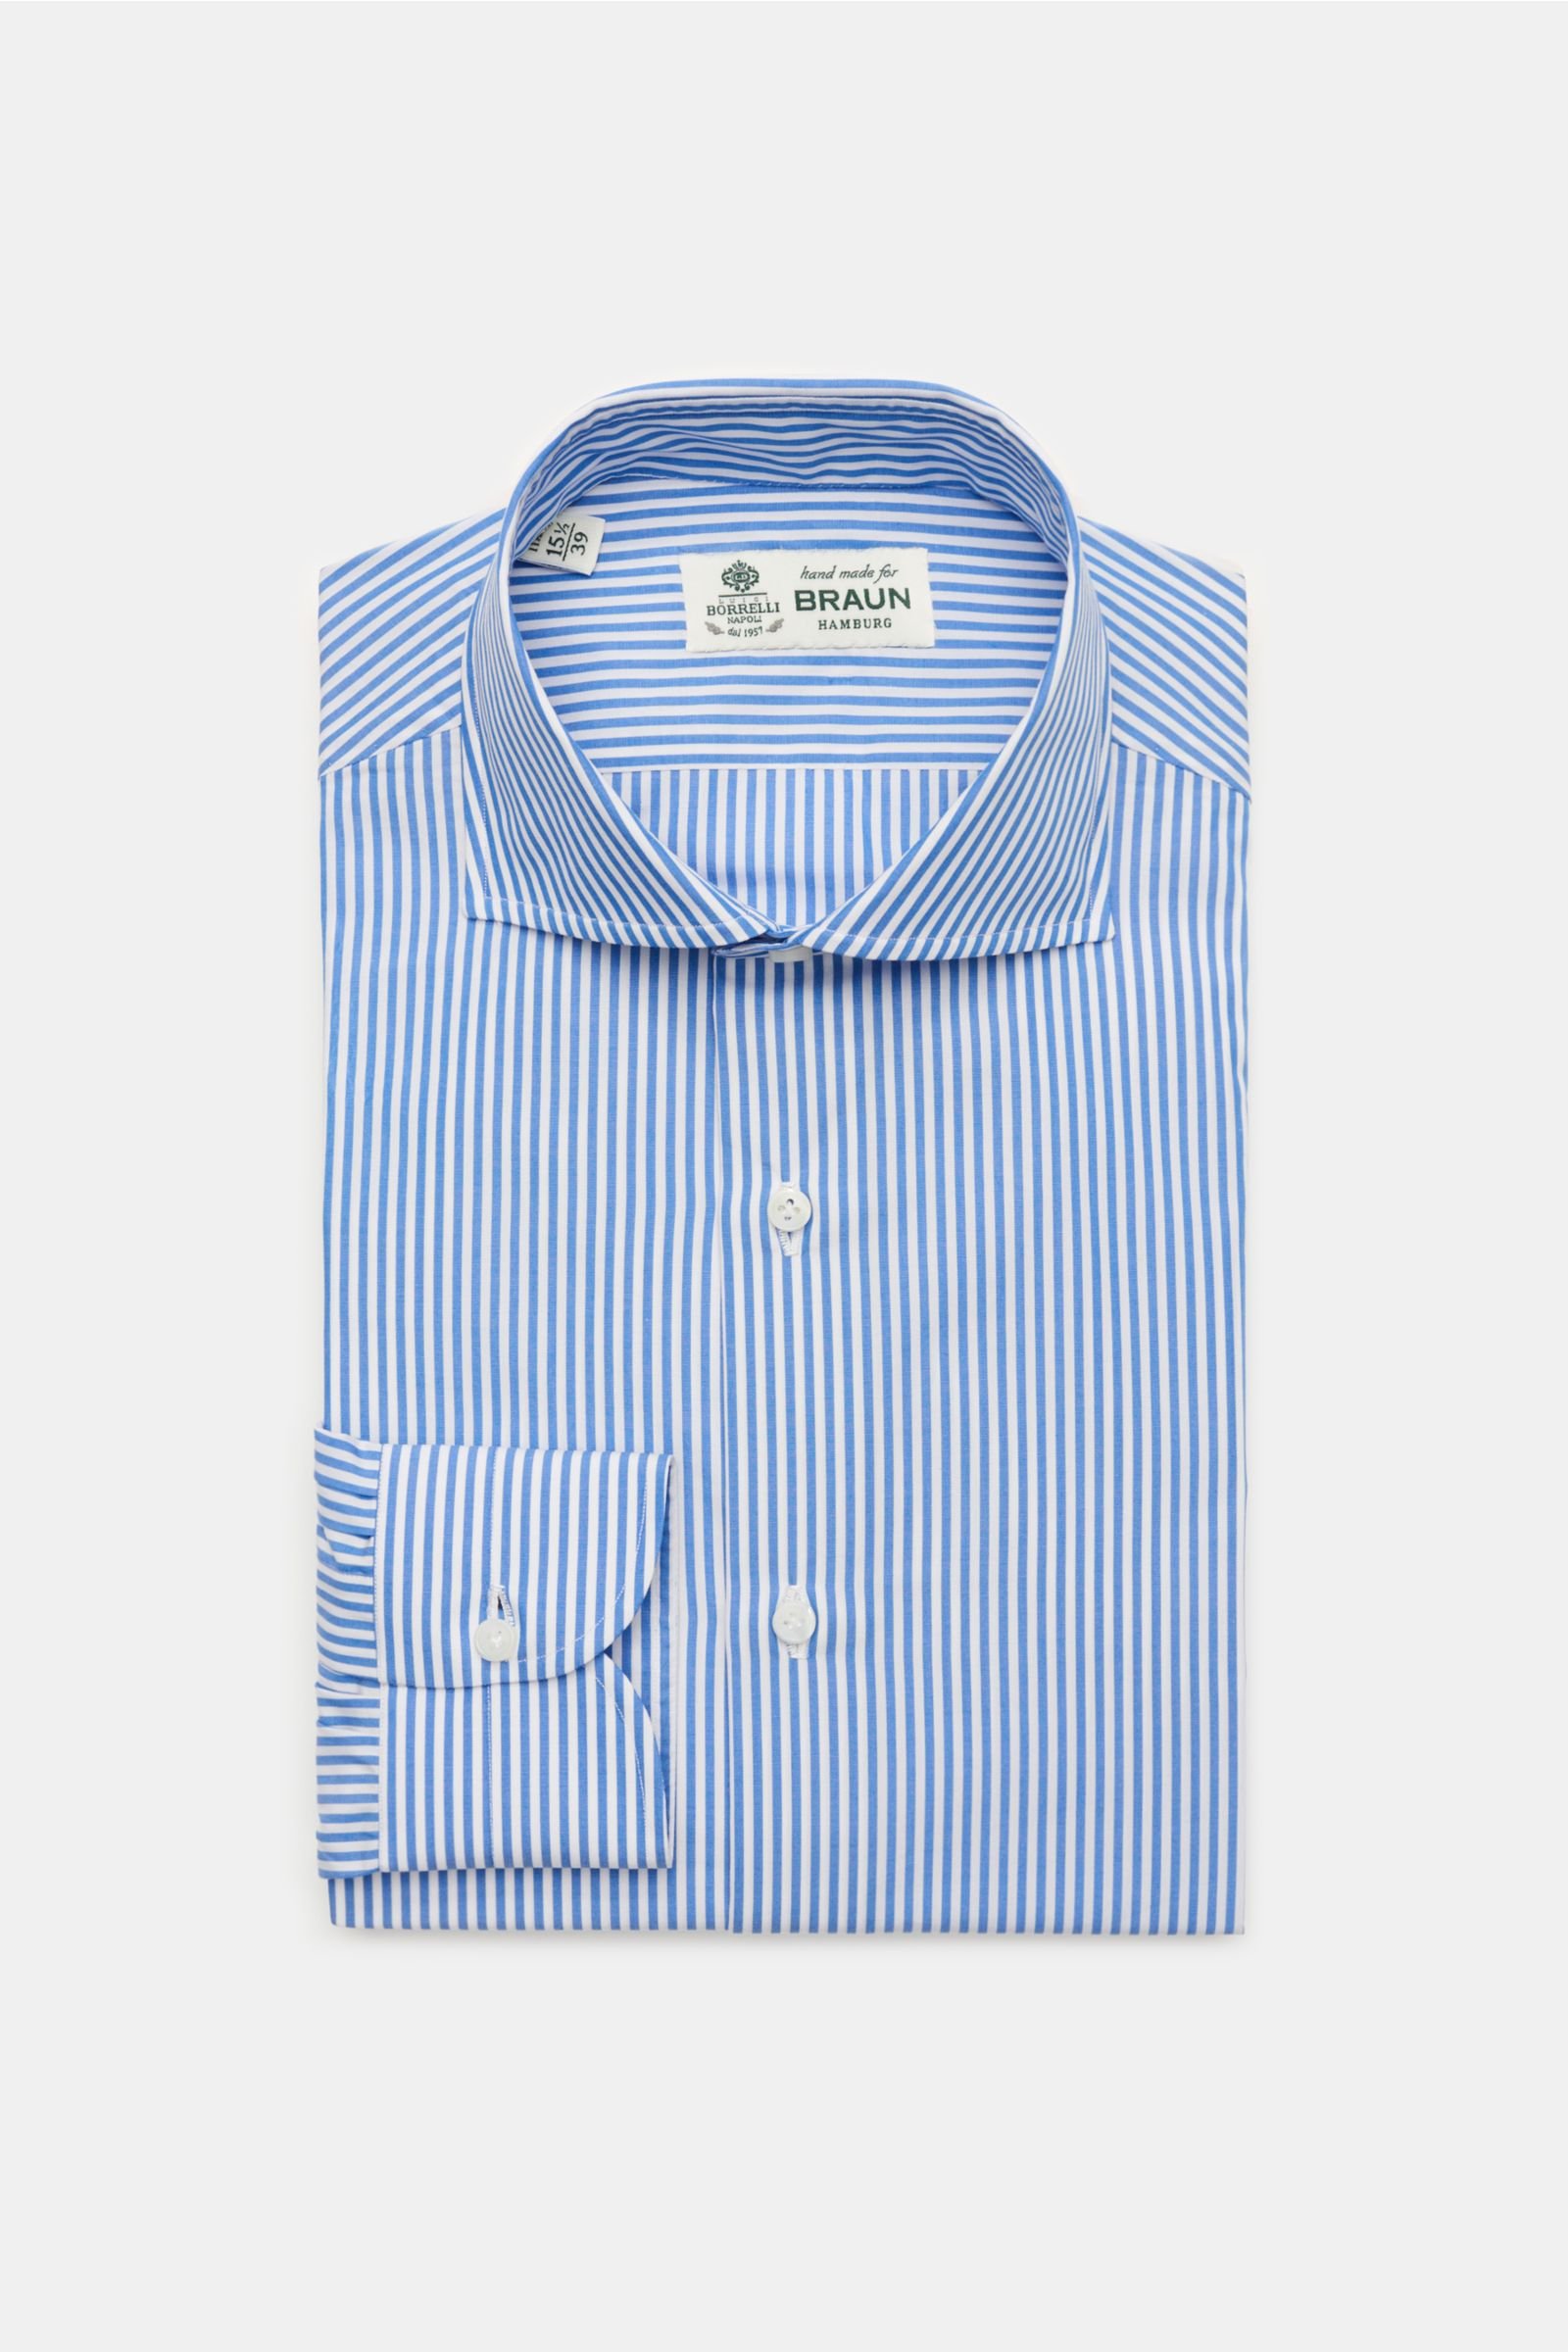 Business shirt 'Nando' shark collar blue/white striped